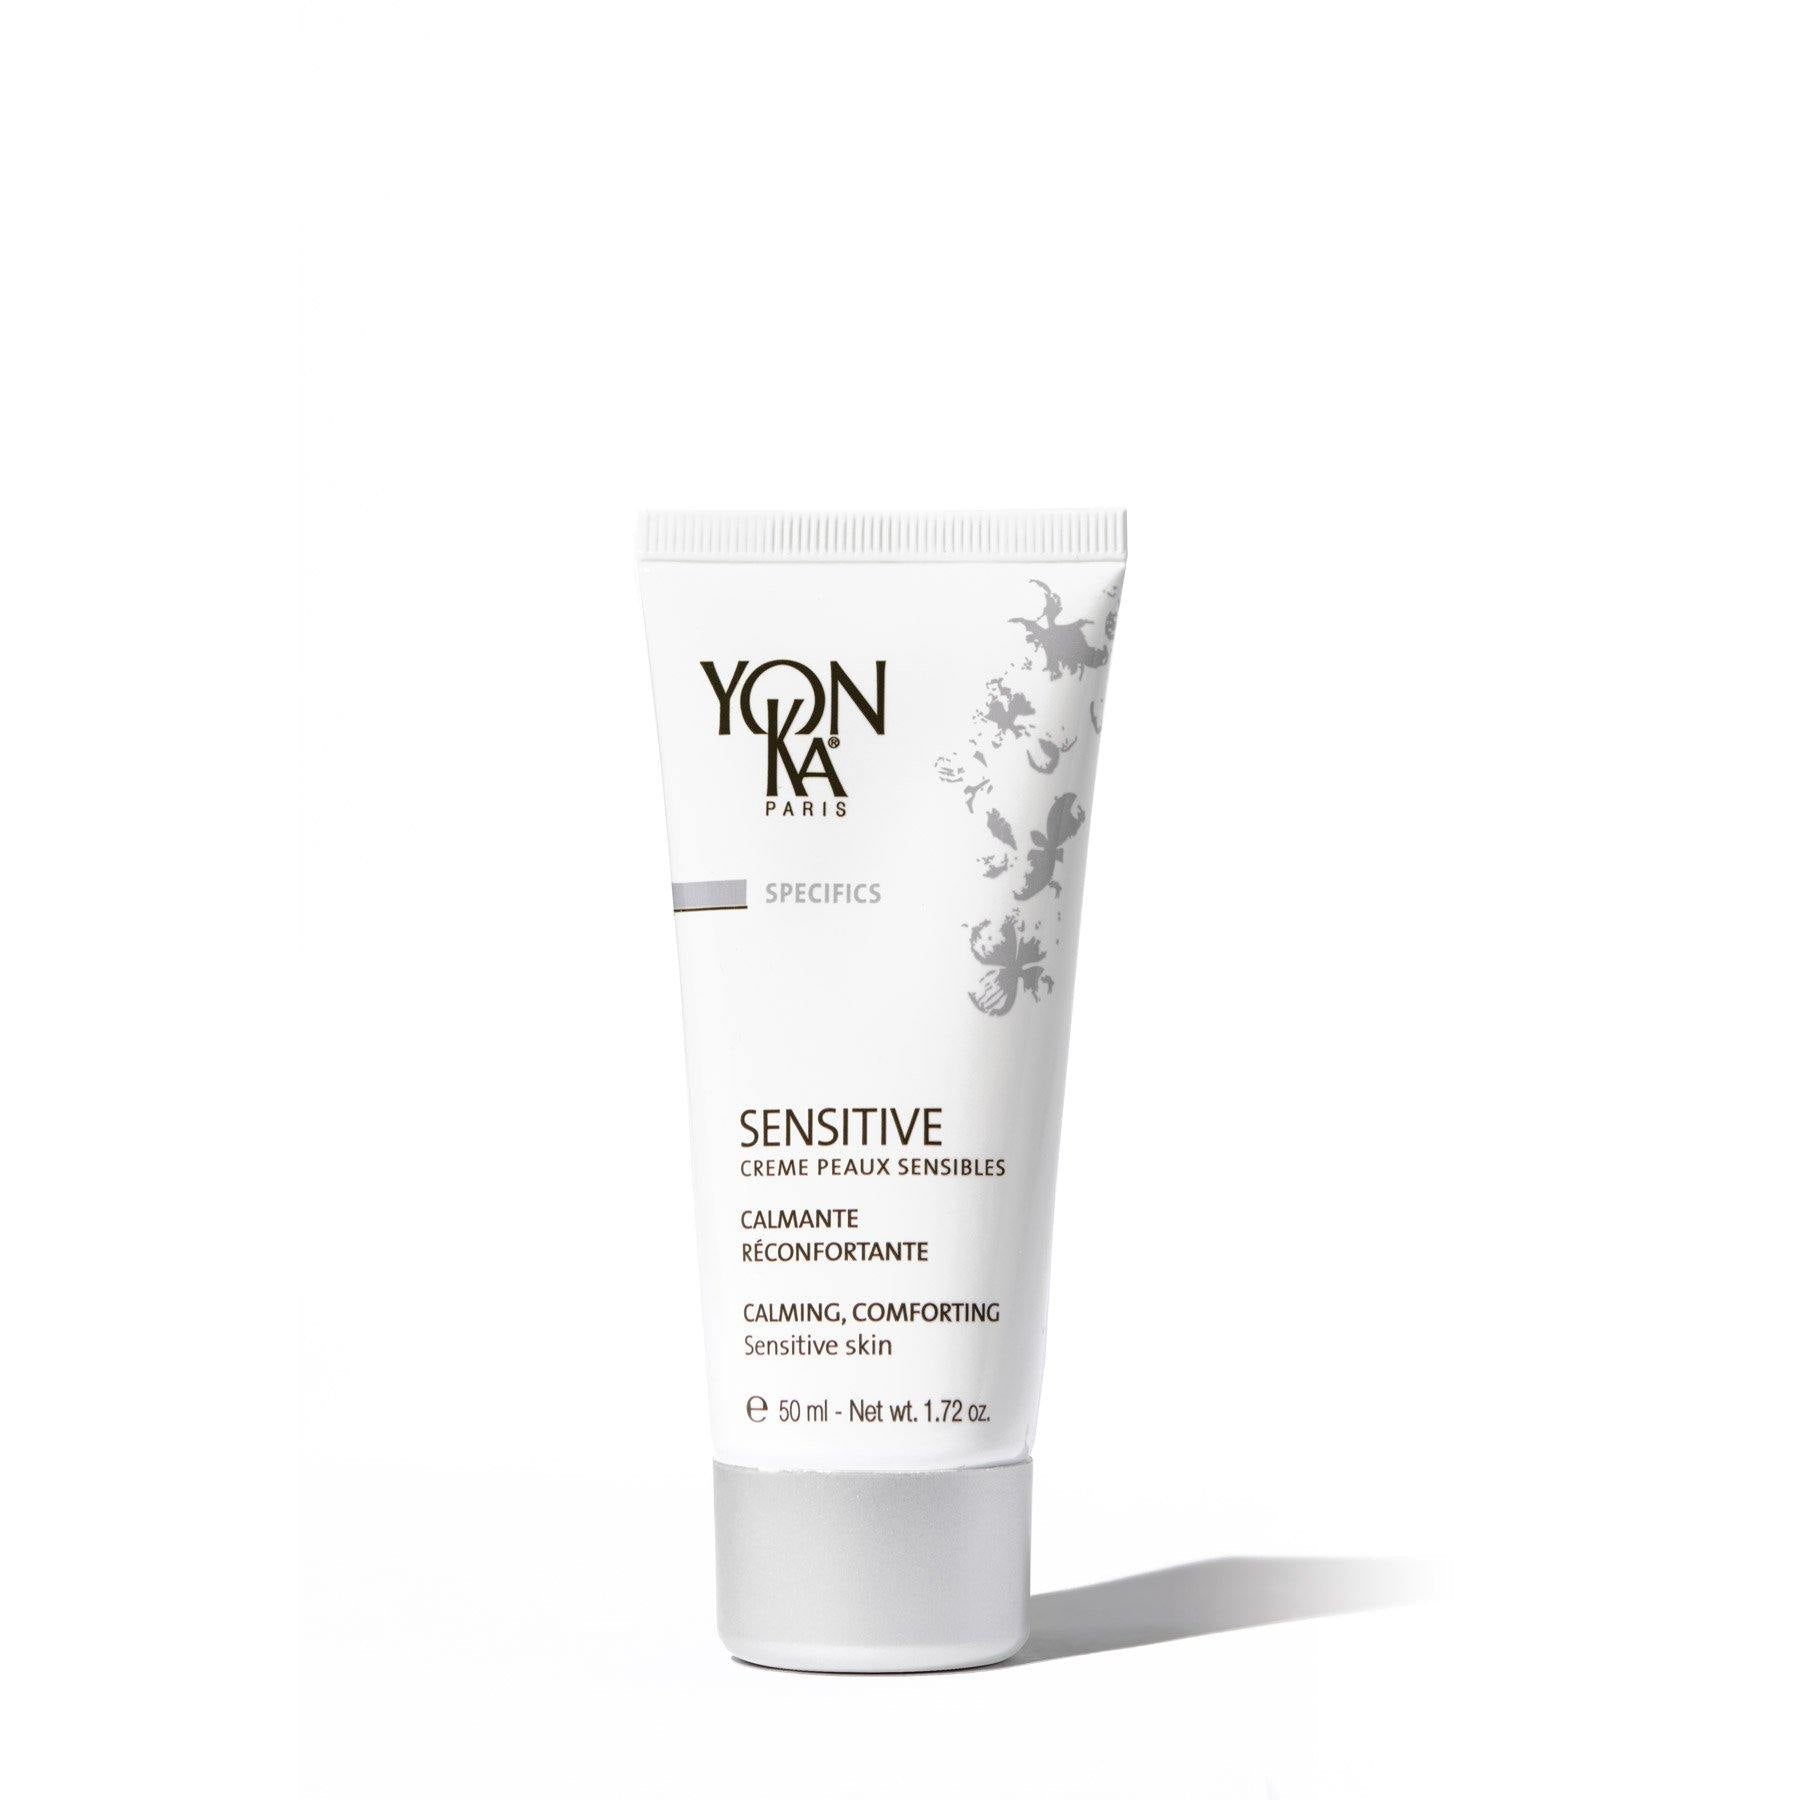 SENSITIVE sensitive skin cream 50ml - Yonka - 53 Karat